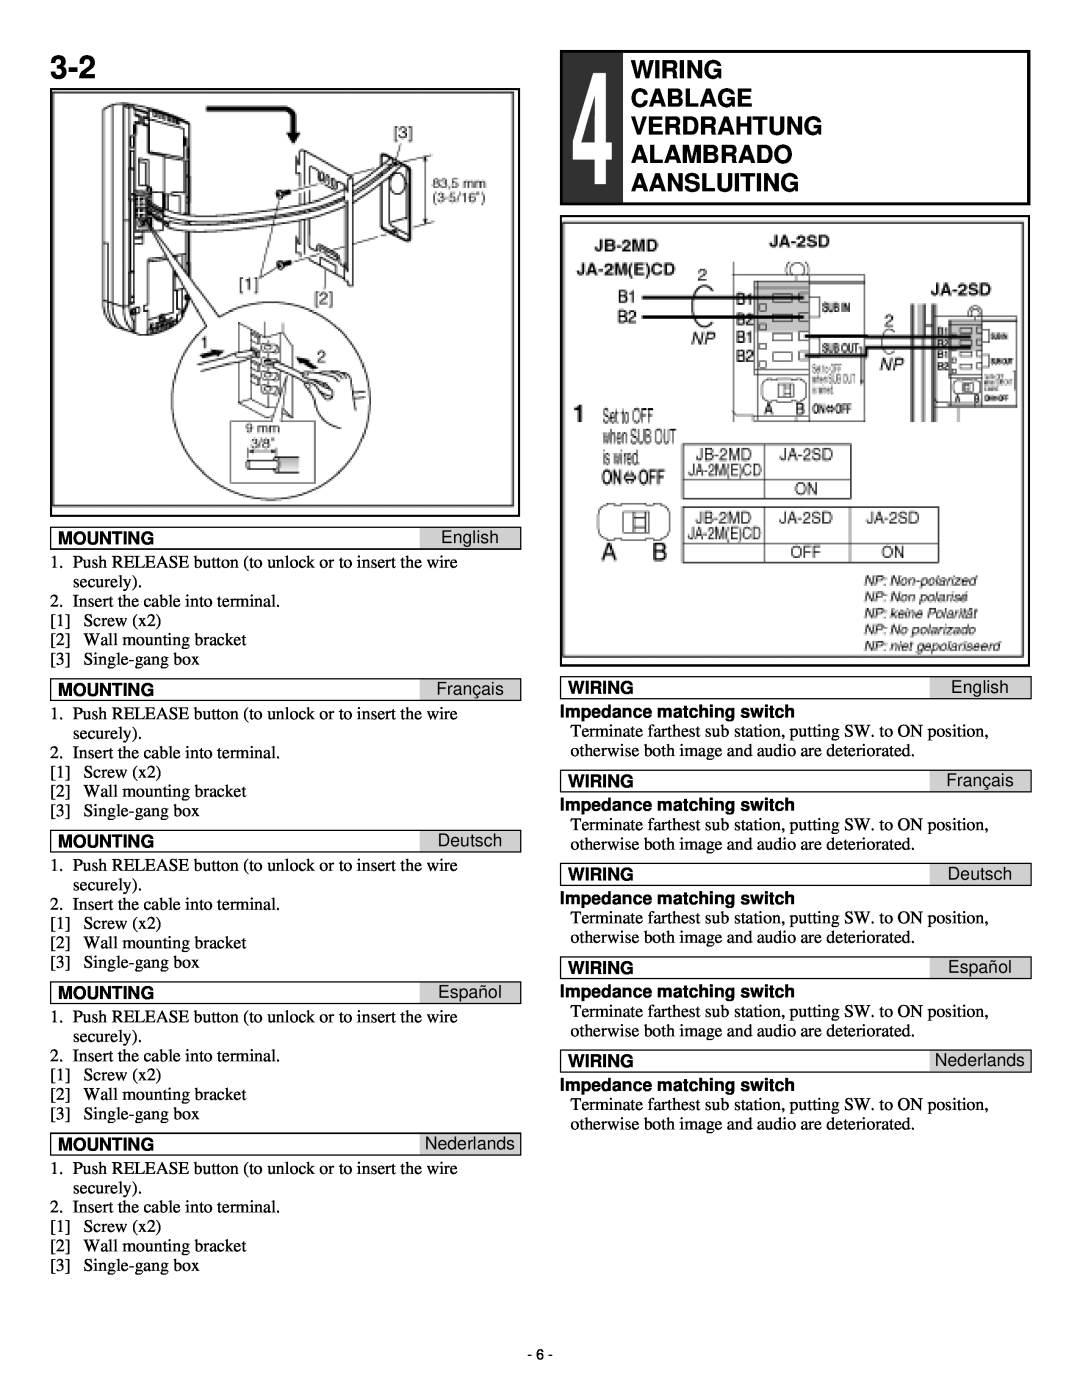 Aiphone ja-2sd operation manual Wiring, Cablage, Verdrahtung, Alambrado, Aansluiting 